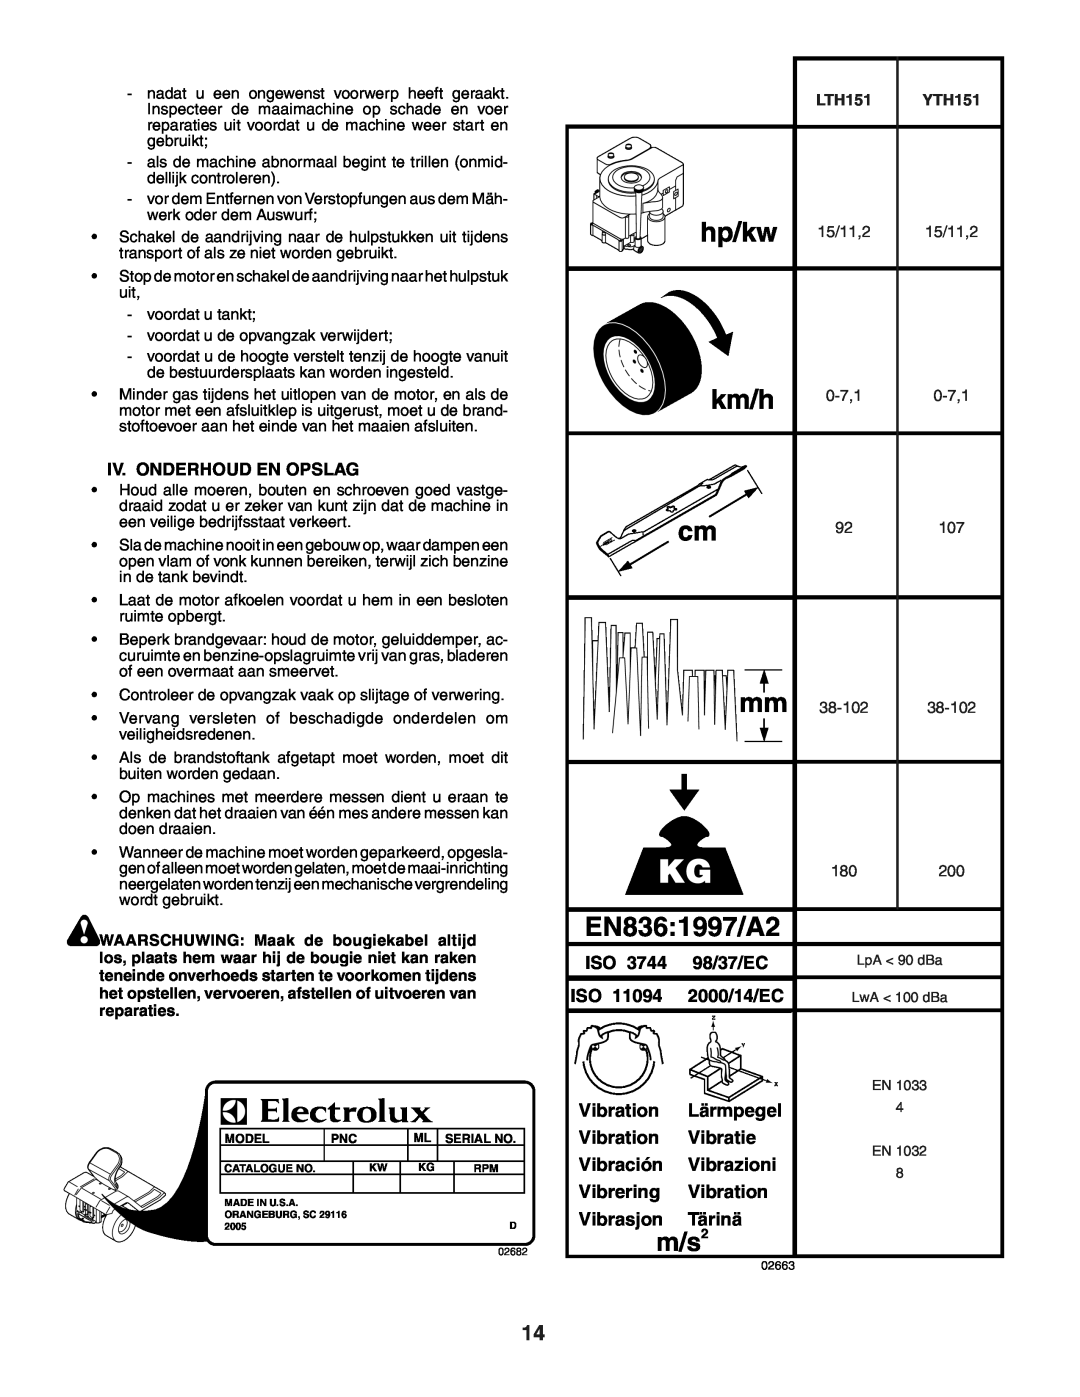 Husqvarna YTH151 instruction manual EN8361997/A2, m/s2 